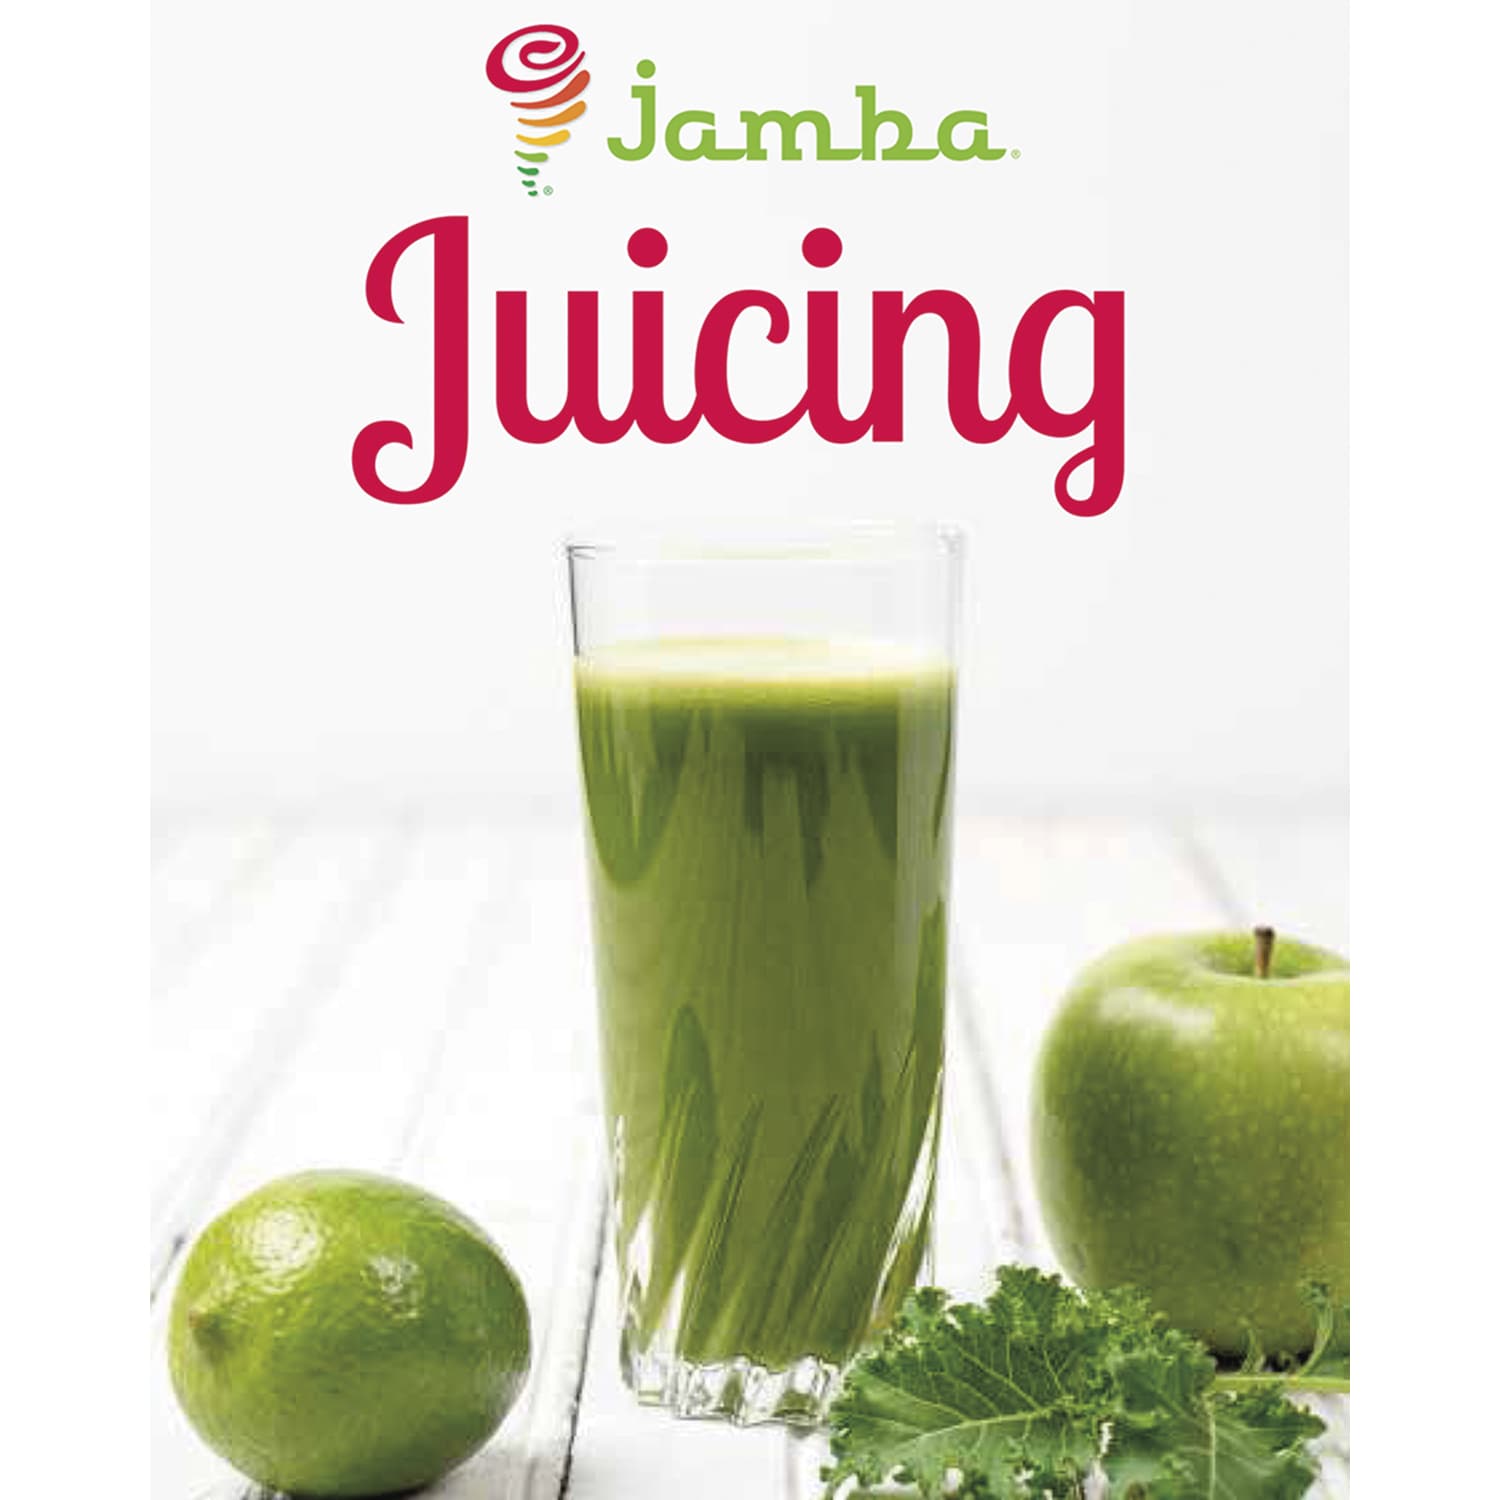 Jamba Juice extractor retail price - Curt's Premium Outlet